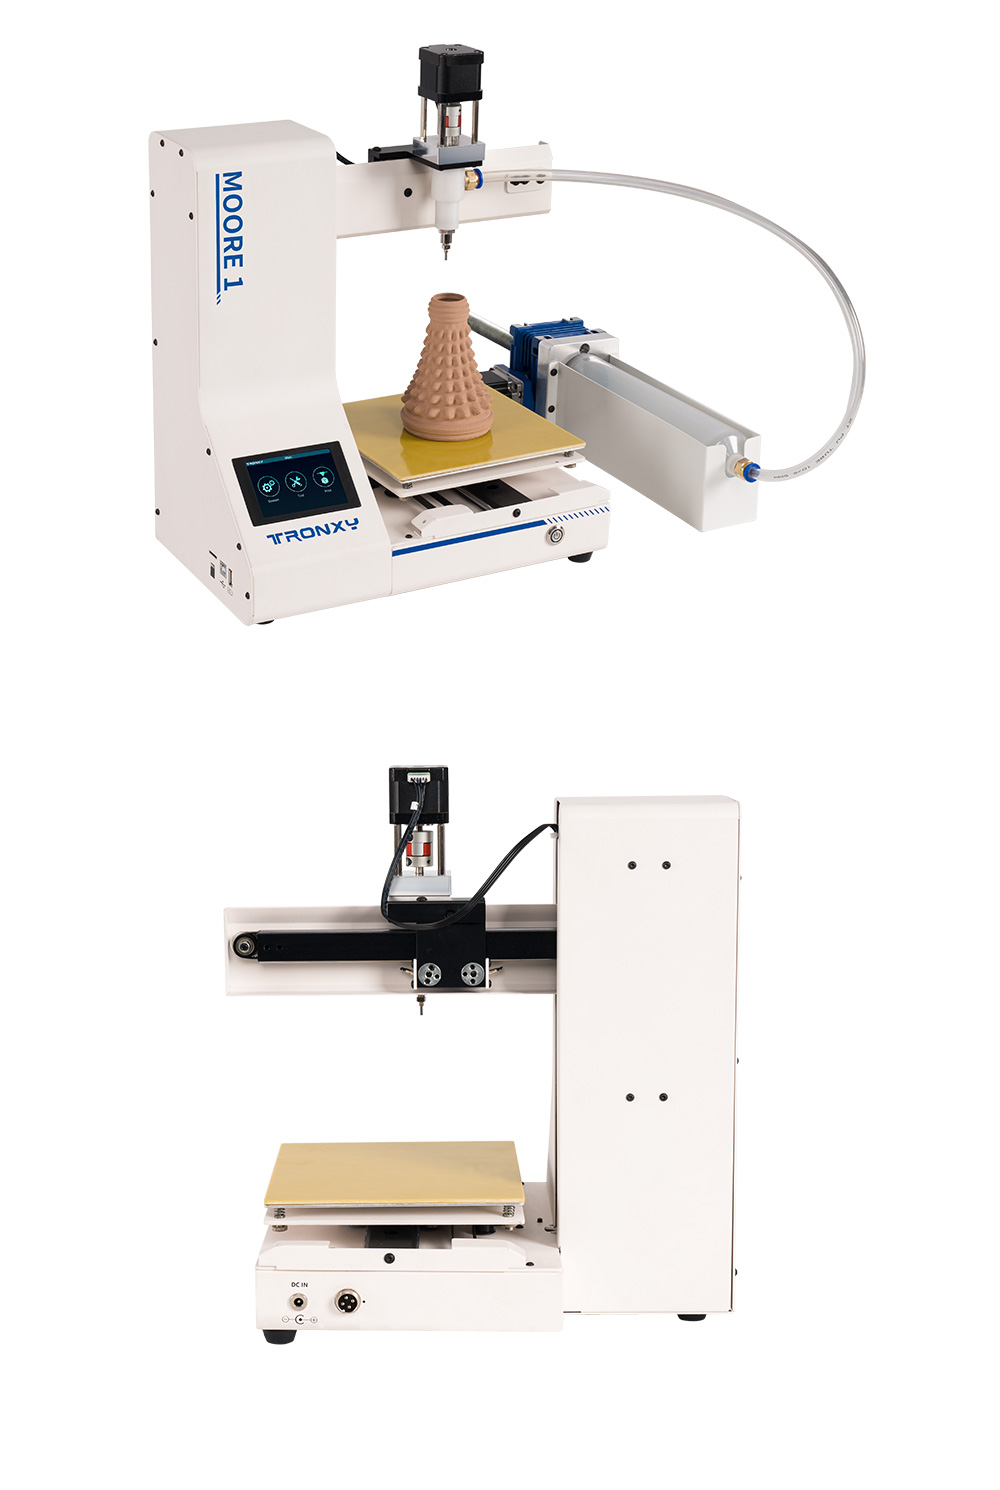 Tronxy Moore 1 Mini Clay 3D Printer, скорость печати 40 мм/с, возобновление печати, TMC2209, 180*180*180 мм